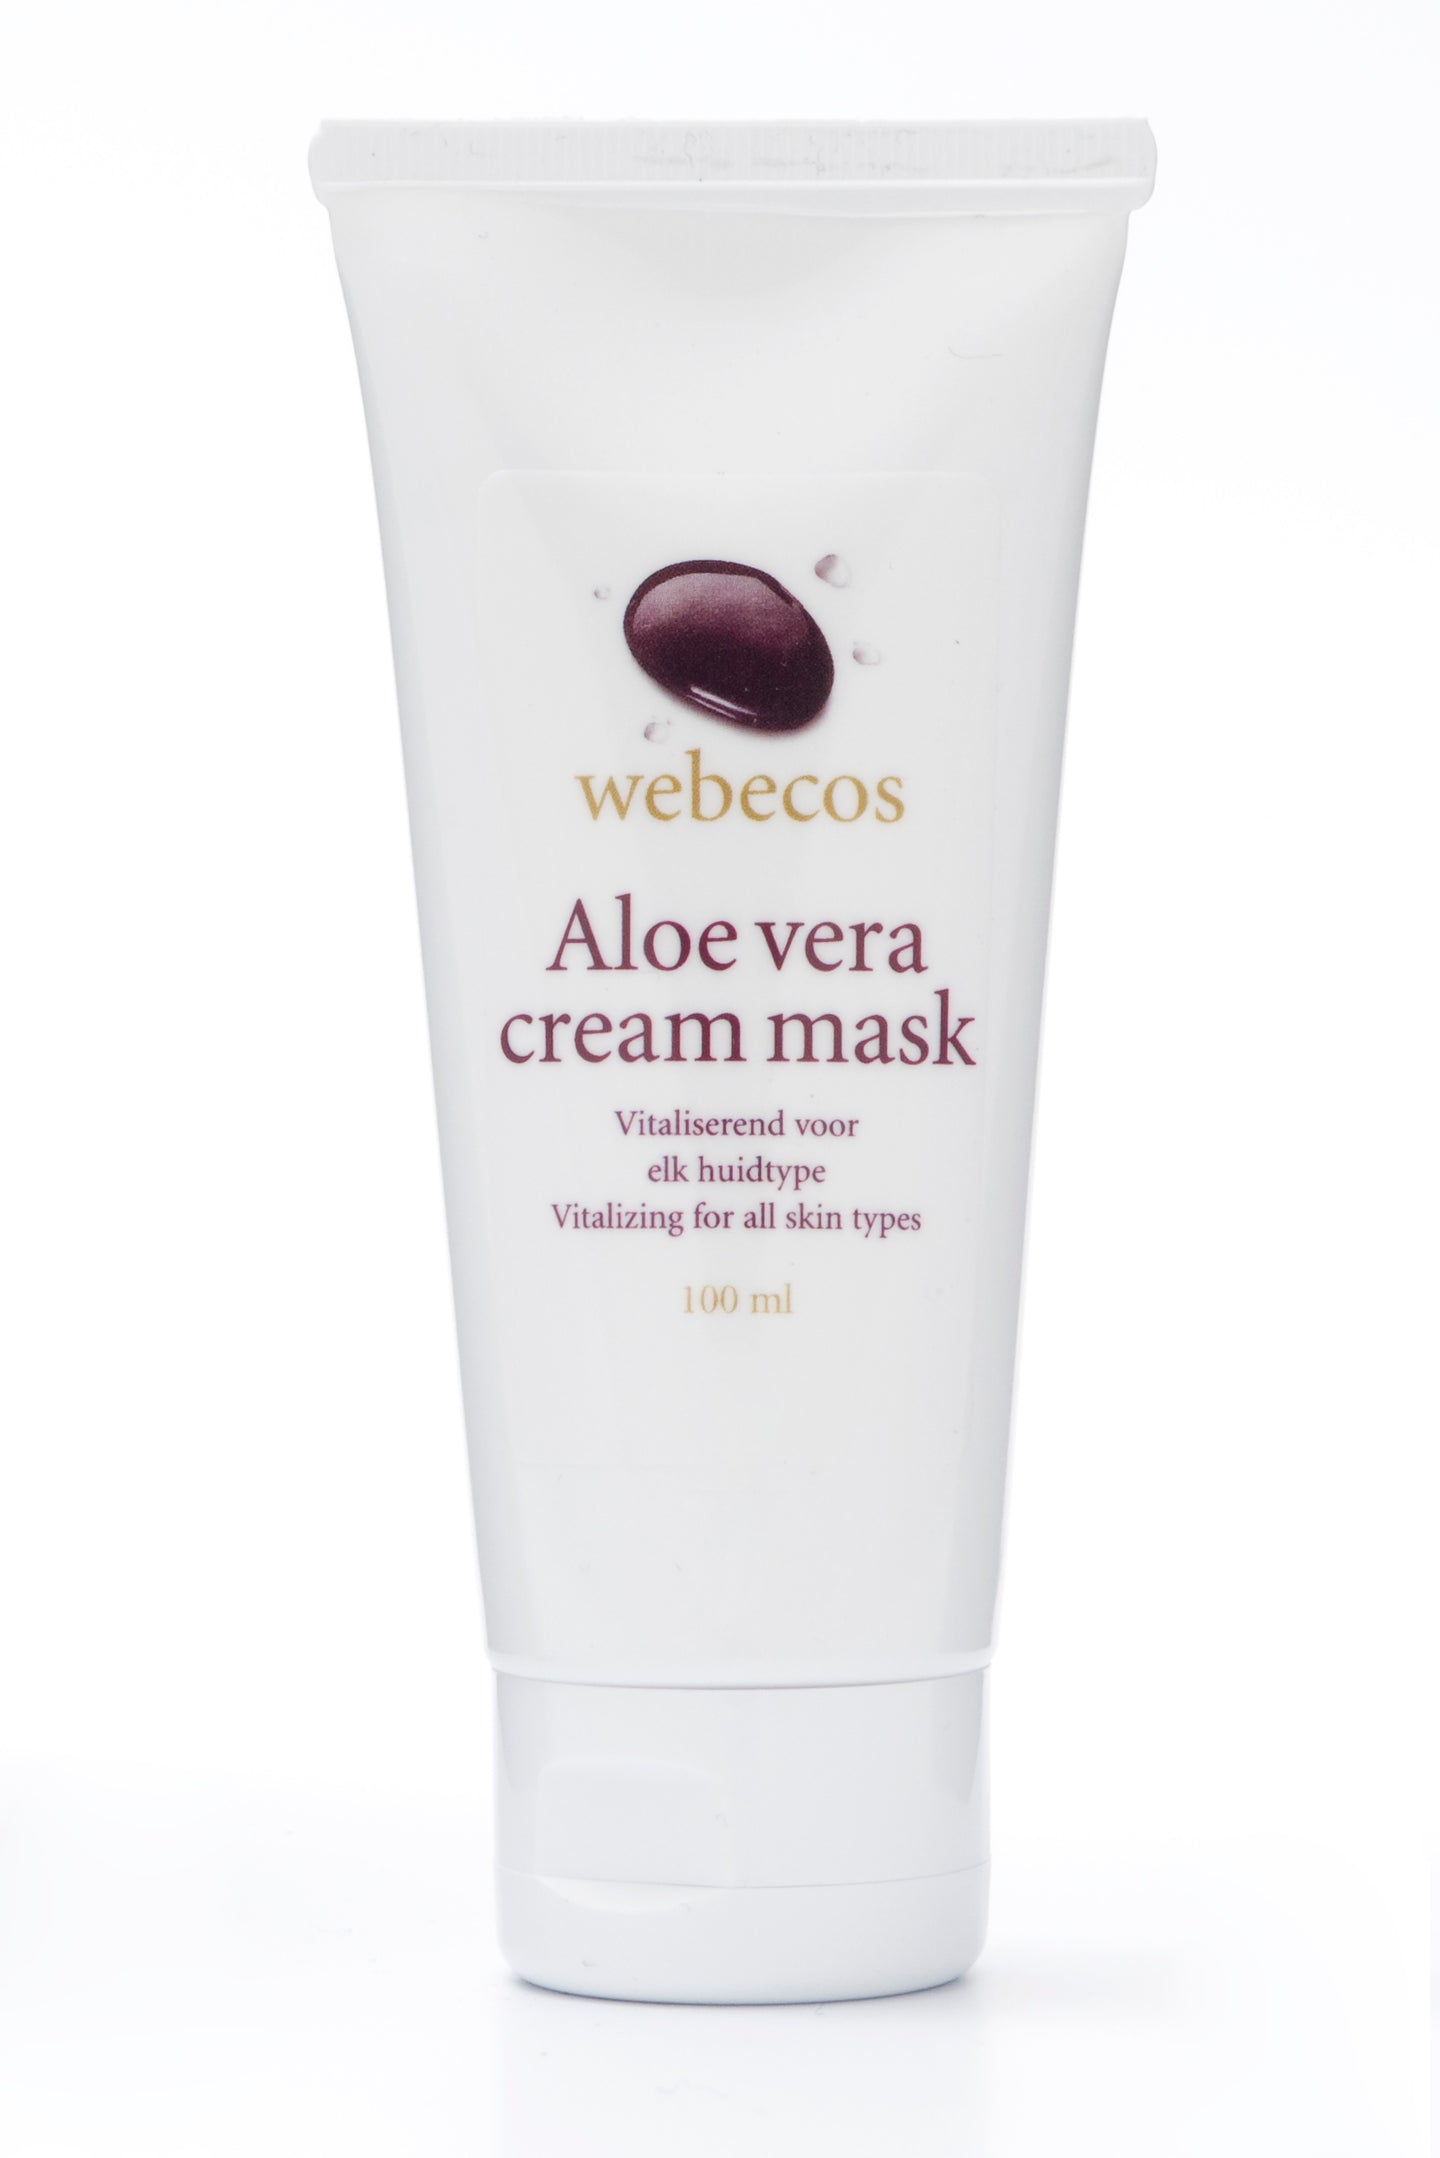 Webecos - Aloe vera cream mask